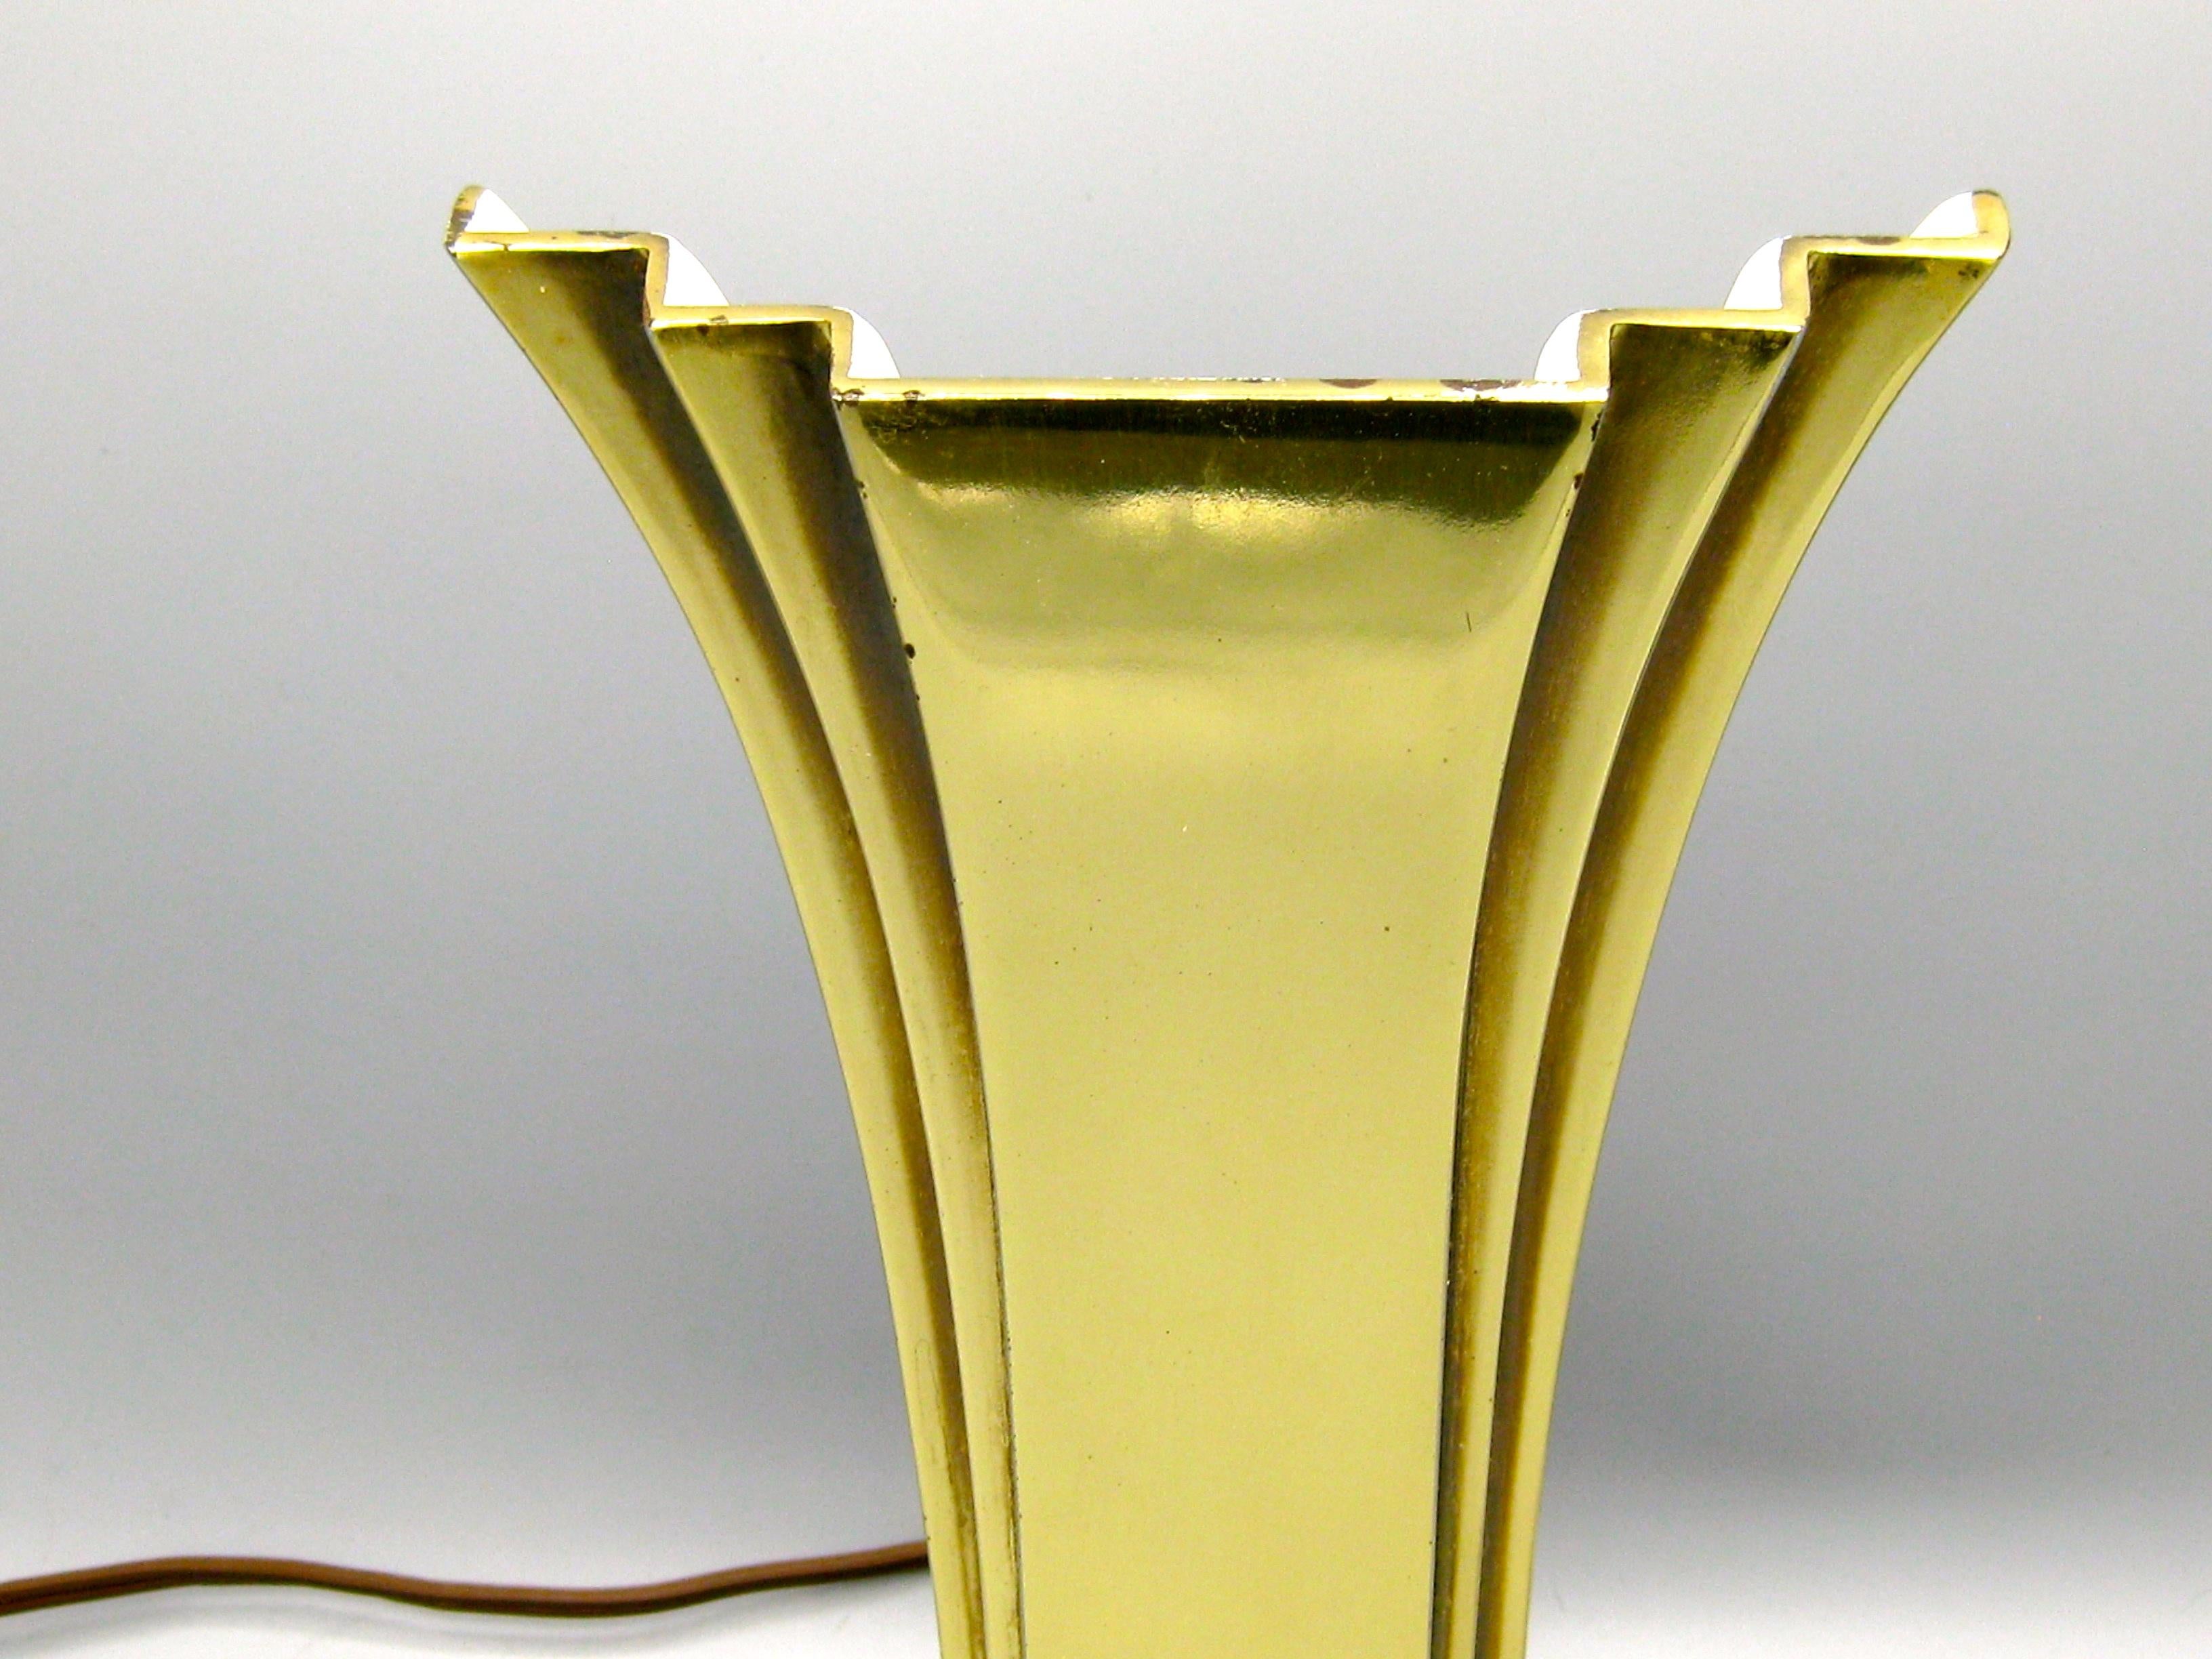 American Stiffel Art Deco Revival Brass Desk or Table Fan Lamp Uplight, circa 1970s For Sale